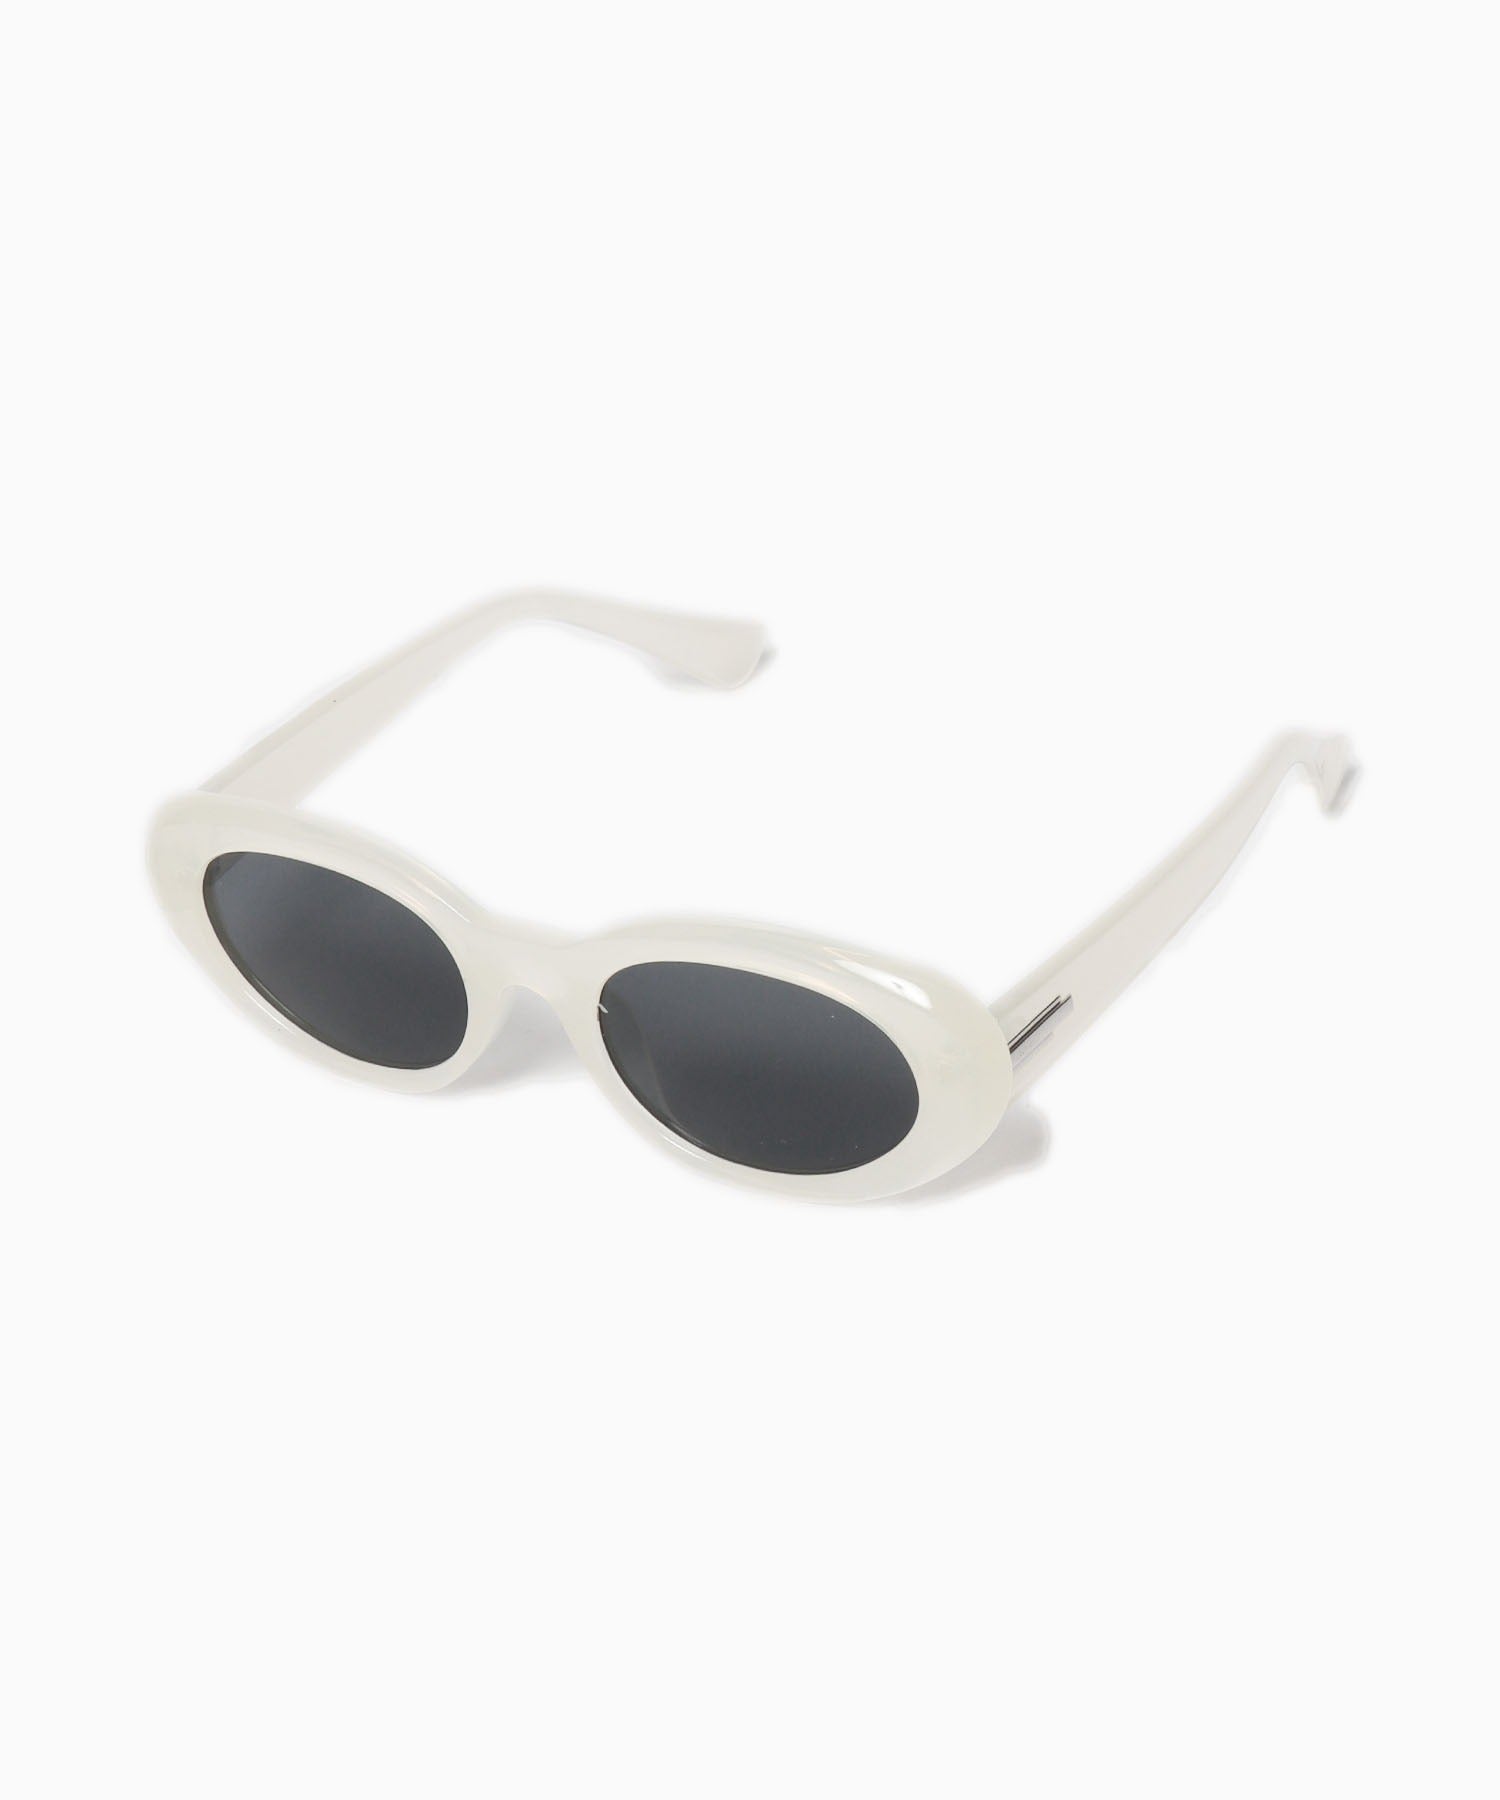 oval frame sunglasses